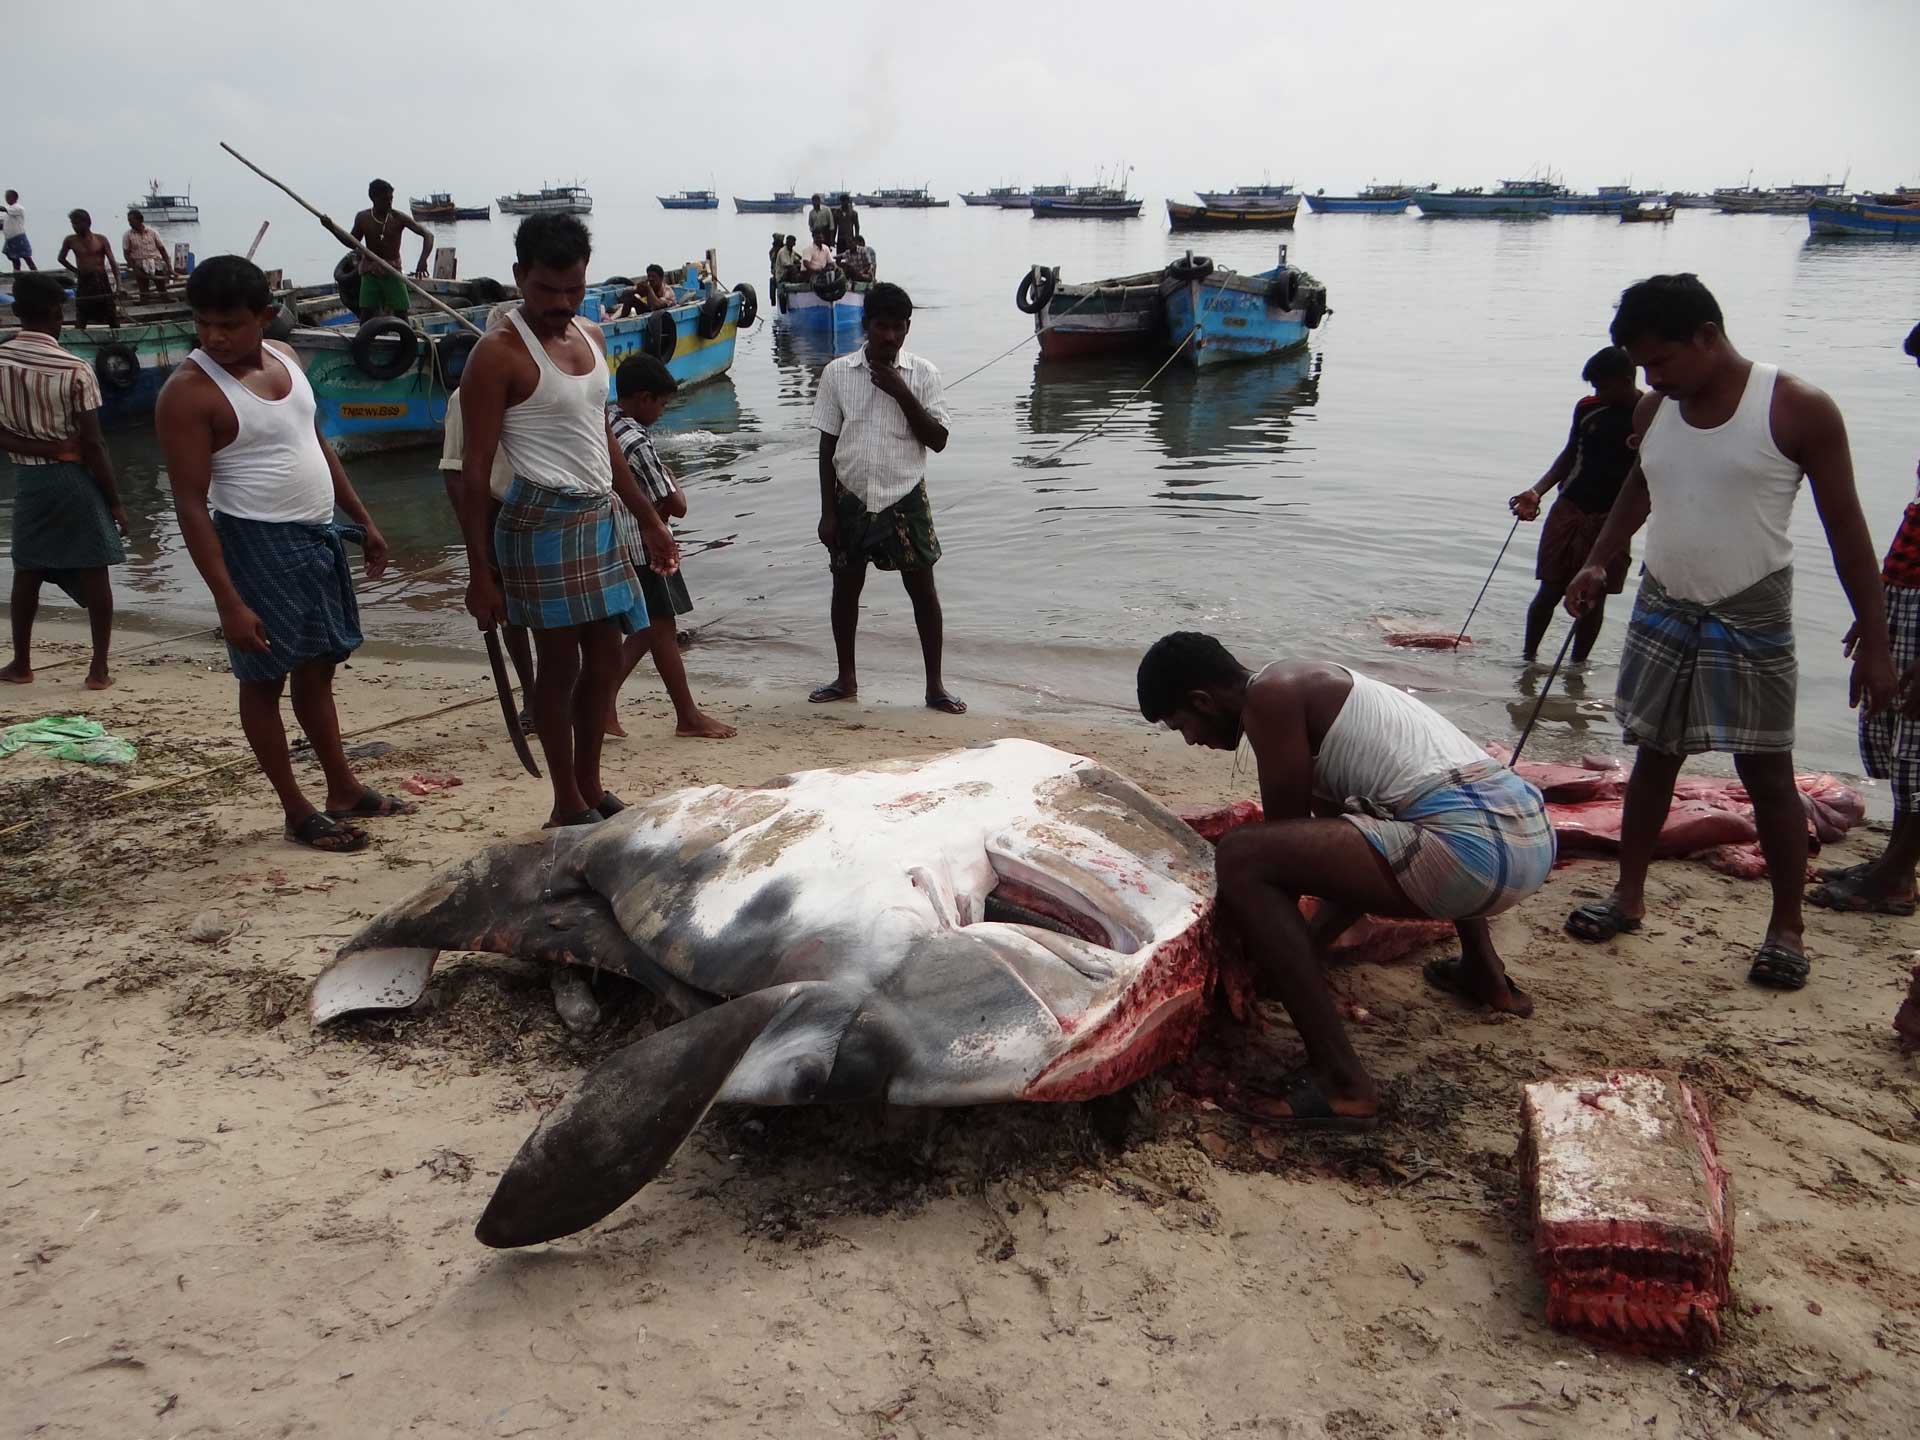 THEIVASINGAMANImohanraj - Mobulid fishery in India